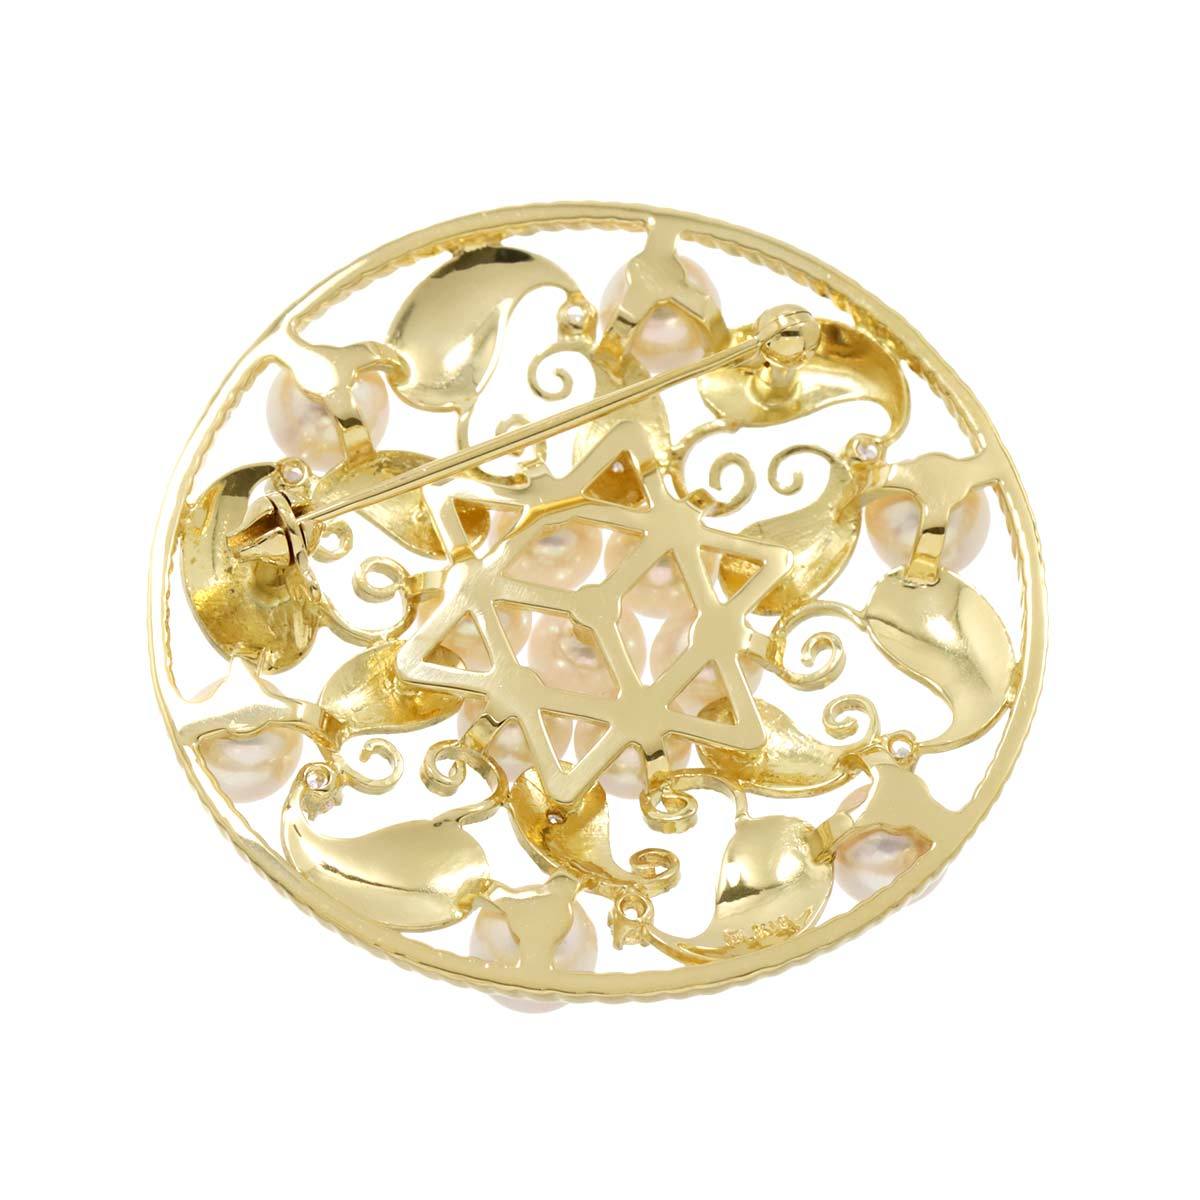  Mikimoto MIKIMOTO Akoya pearl 5.8-5.2mm diamond brooch K18 YG yellow gold 750 pearl Akoya Pearl Brooch 90212493